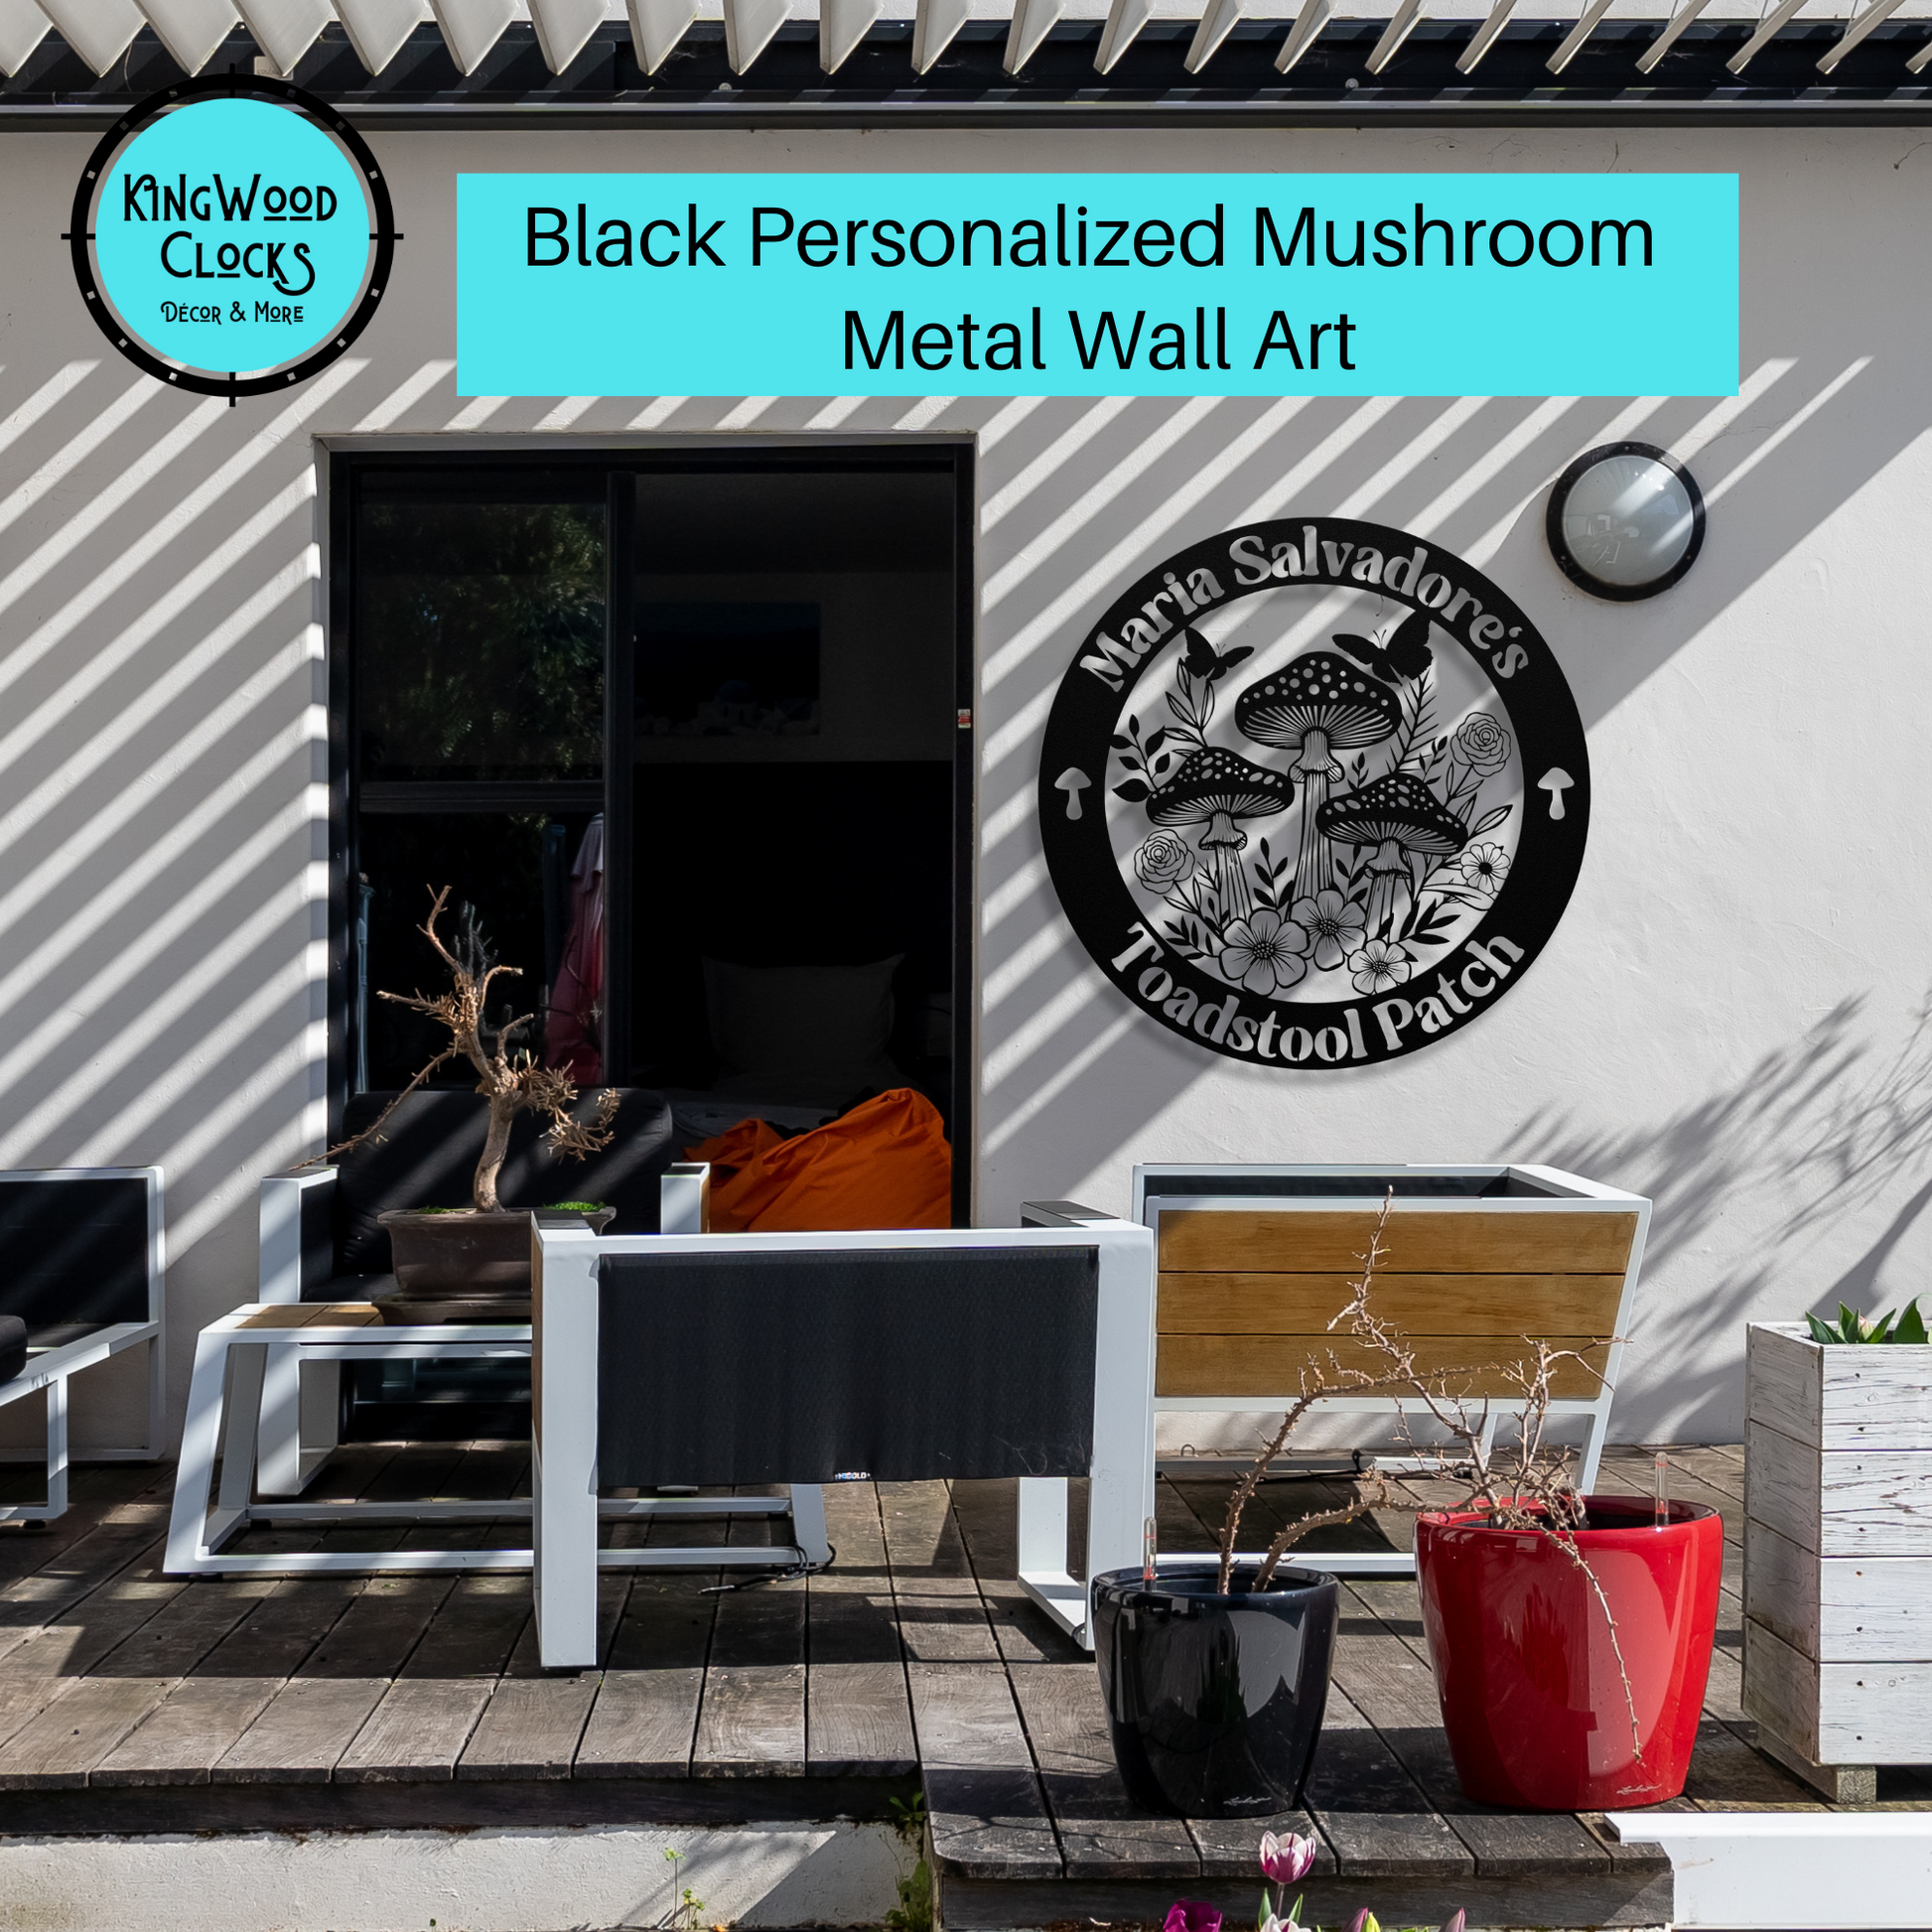 Personalized Mushroom Metal Wall Art black outside porch